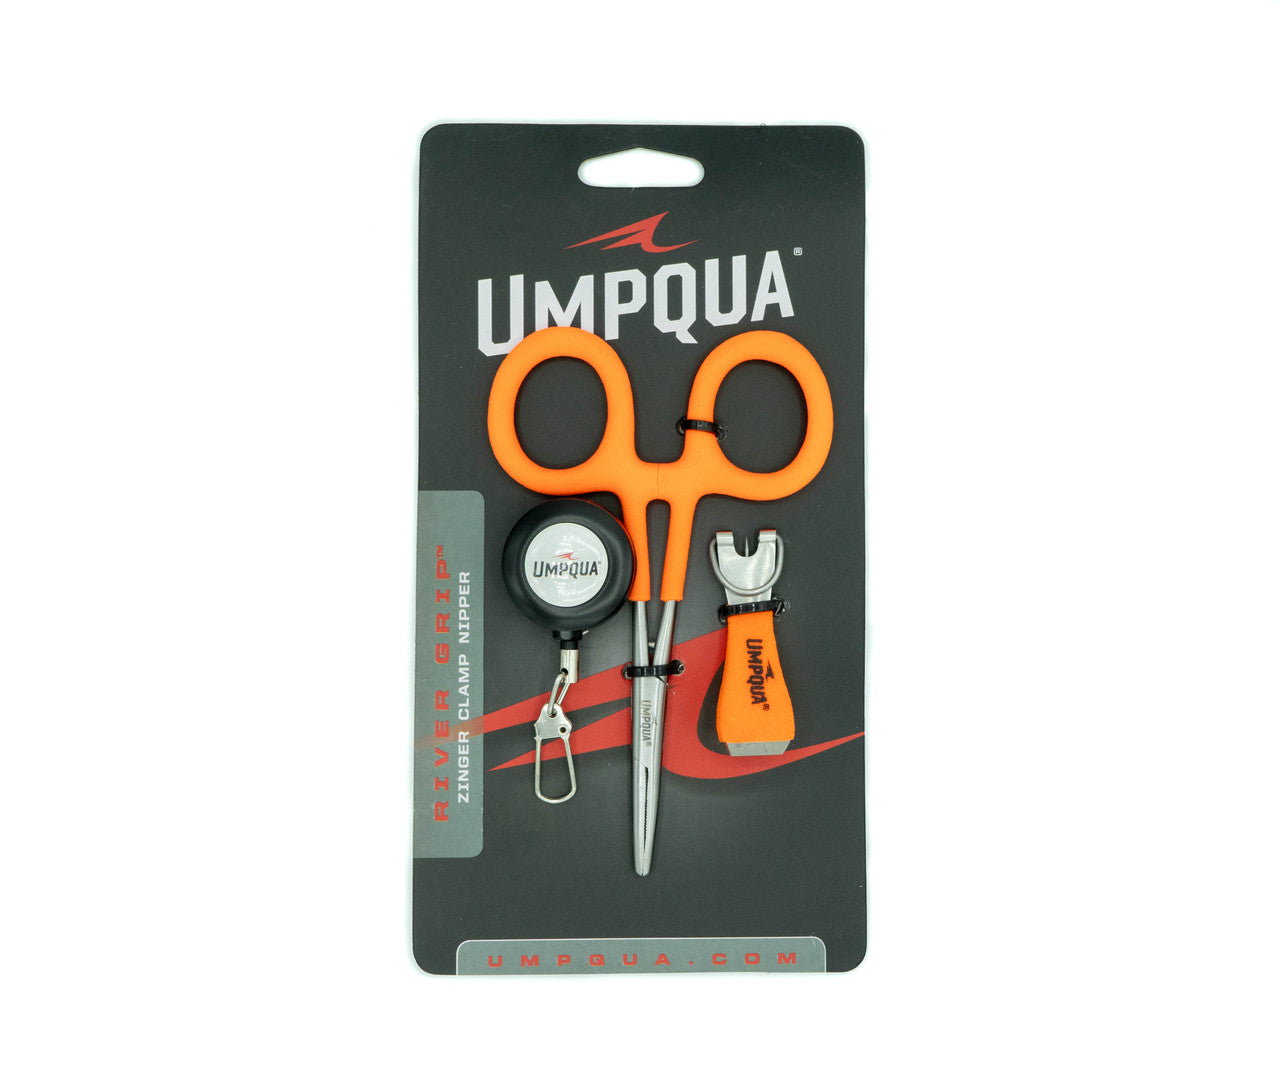 Umpqua River Grip Zinger/Nipper/Clamp Kit - Sportinglife Turangi 